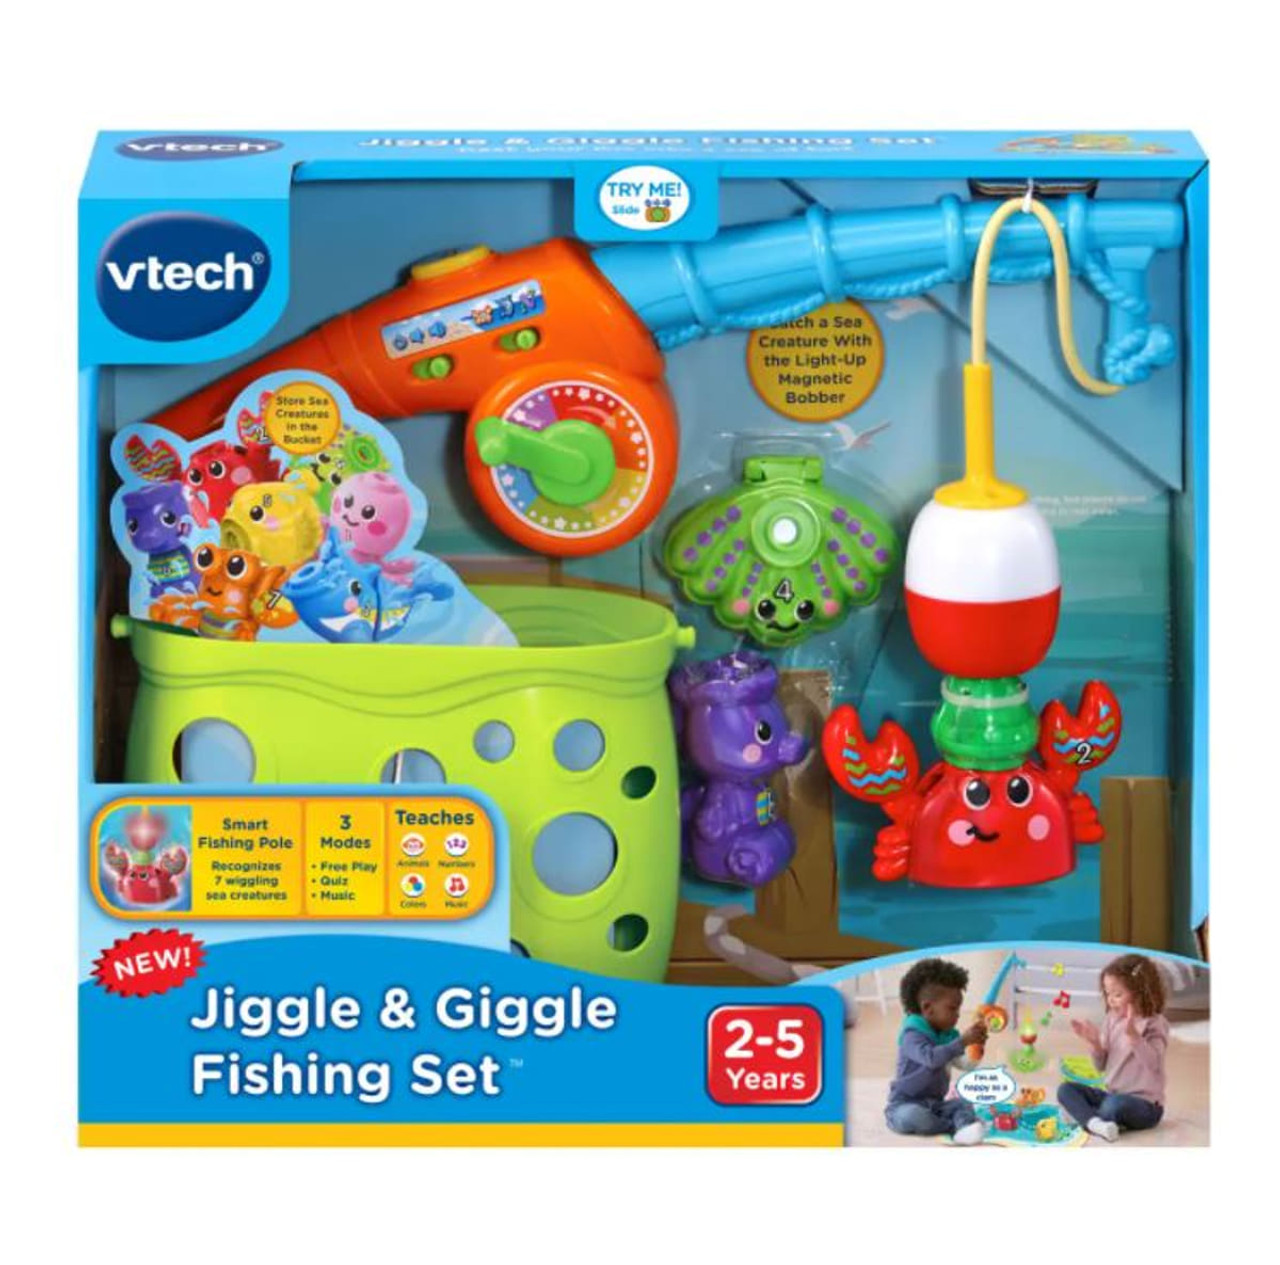 Vtech Jiggle & Giggle Fishing Set, 2-5 Years